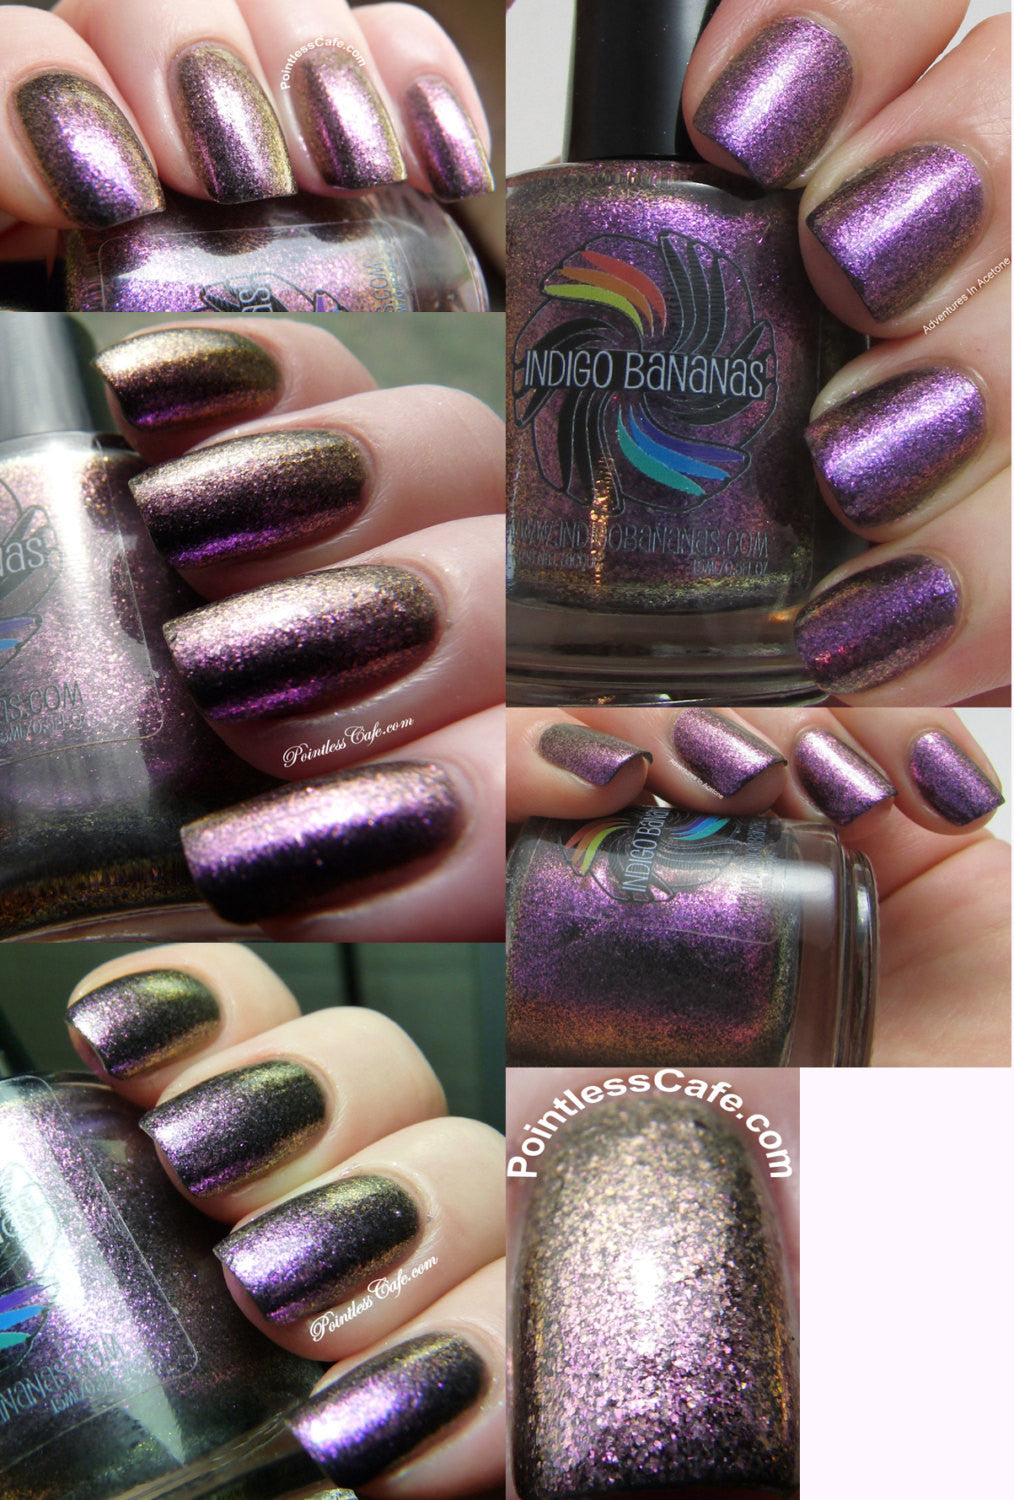 Wednesday - purple/pink/gold multichrome glass fleck